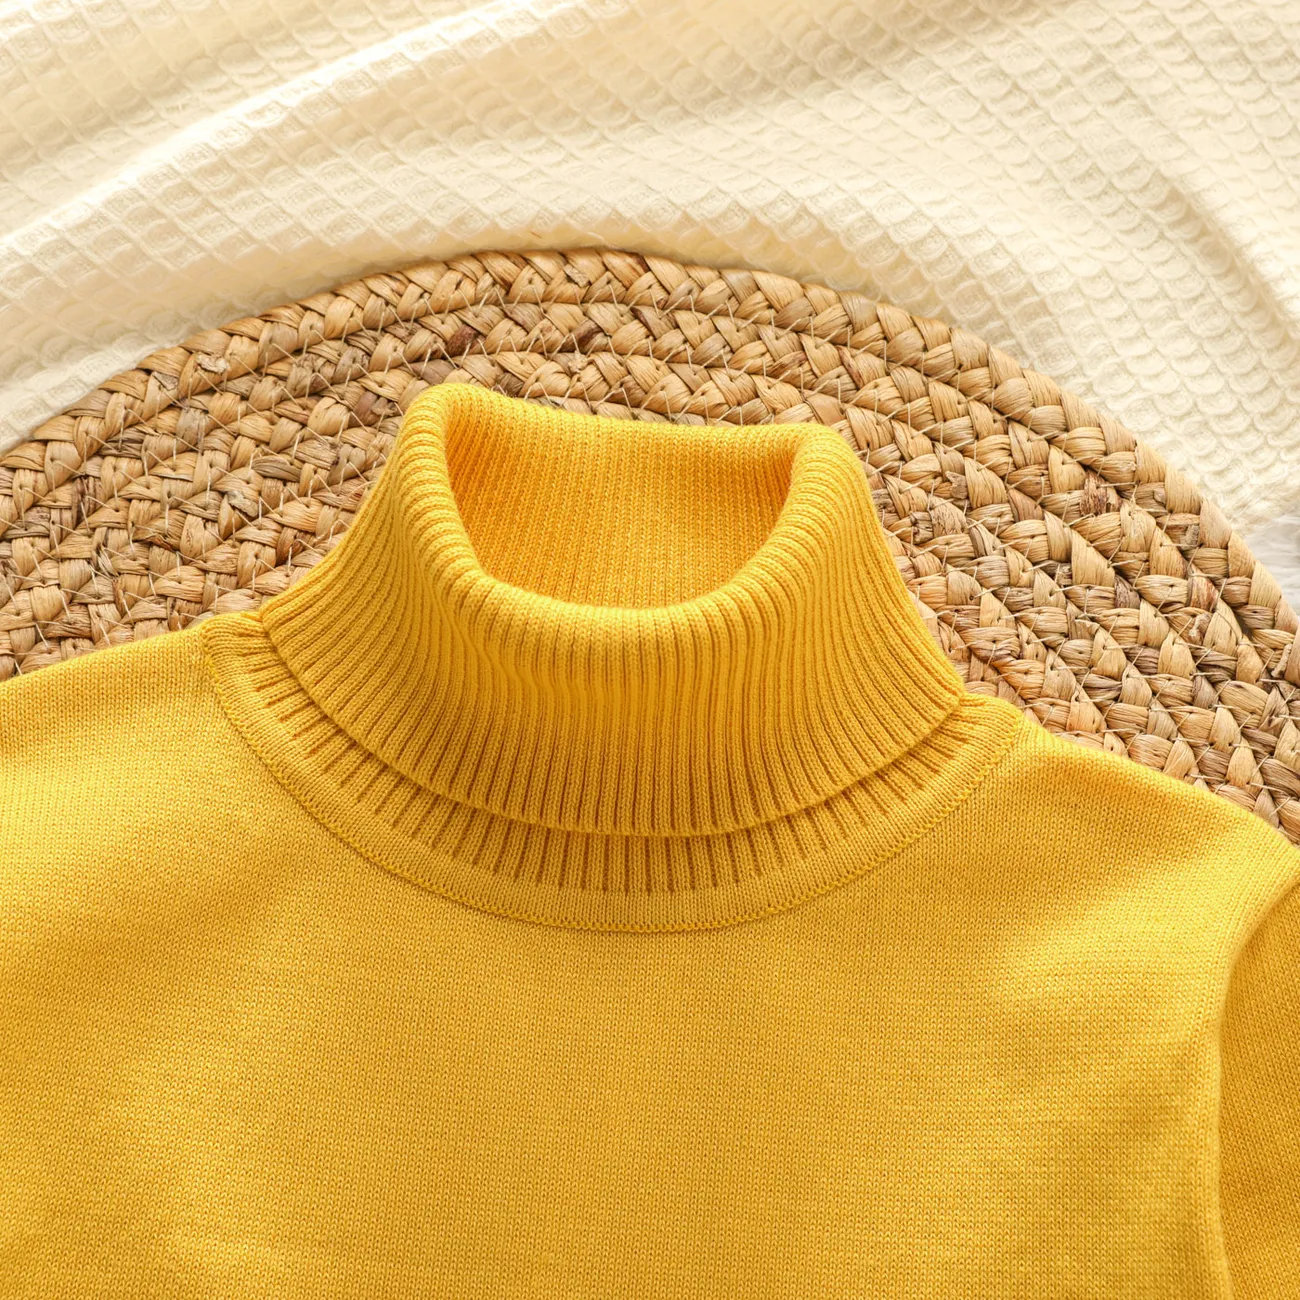 Kinder Unisex Unifarben wolle Pullover gelb big image 1